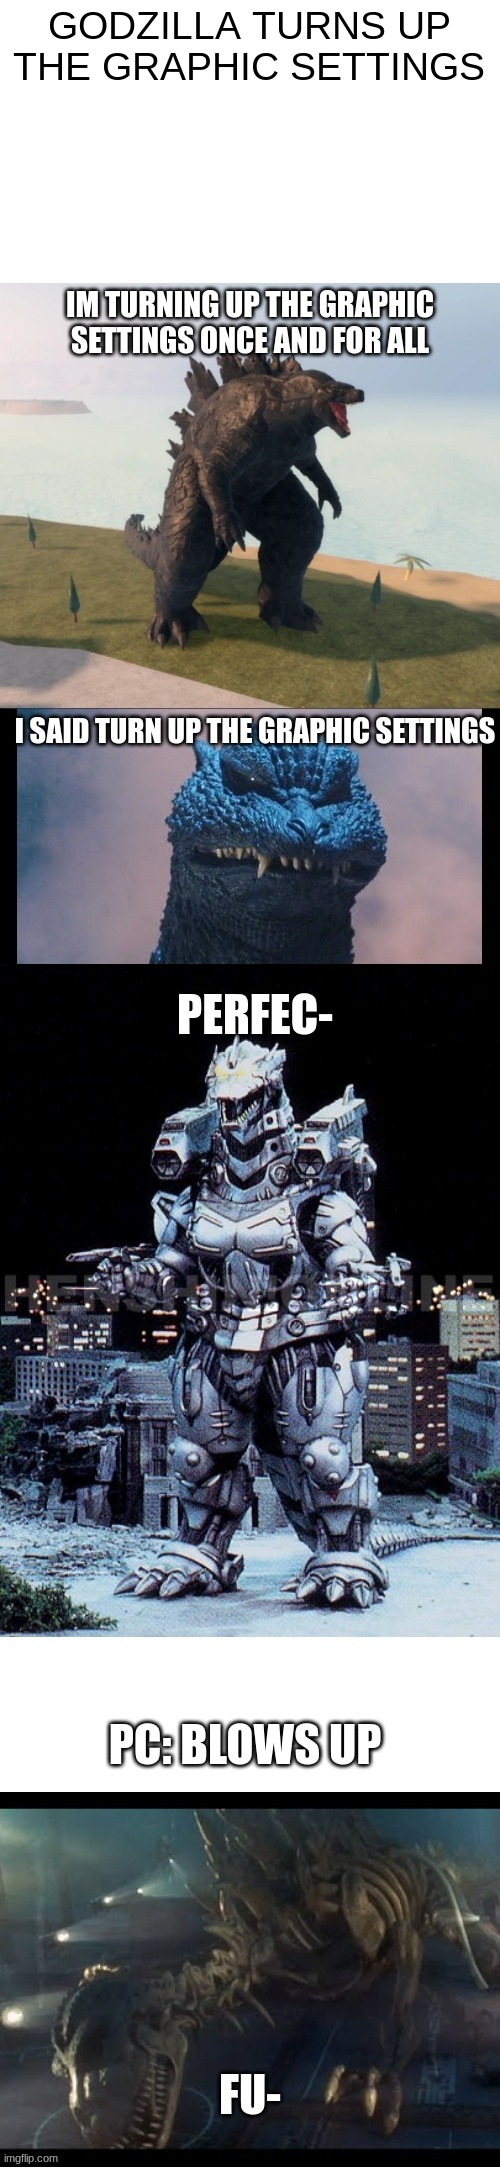 Godzilla turns up the graphic settings | GODZILLA TURNS UP THE GRAPHIC SETTINGS | image tagged in godzilla,goji | made w/ Imgflip meme maker